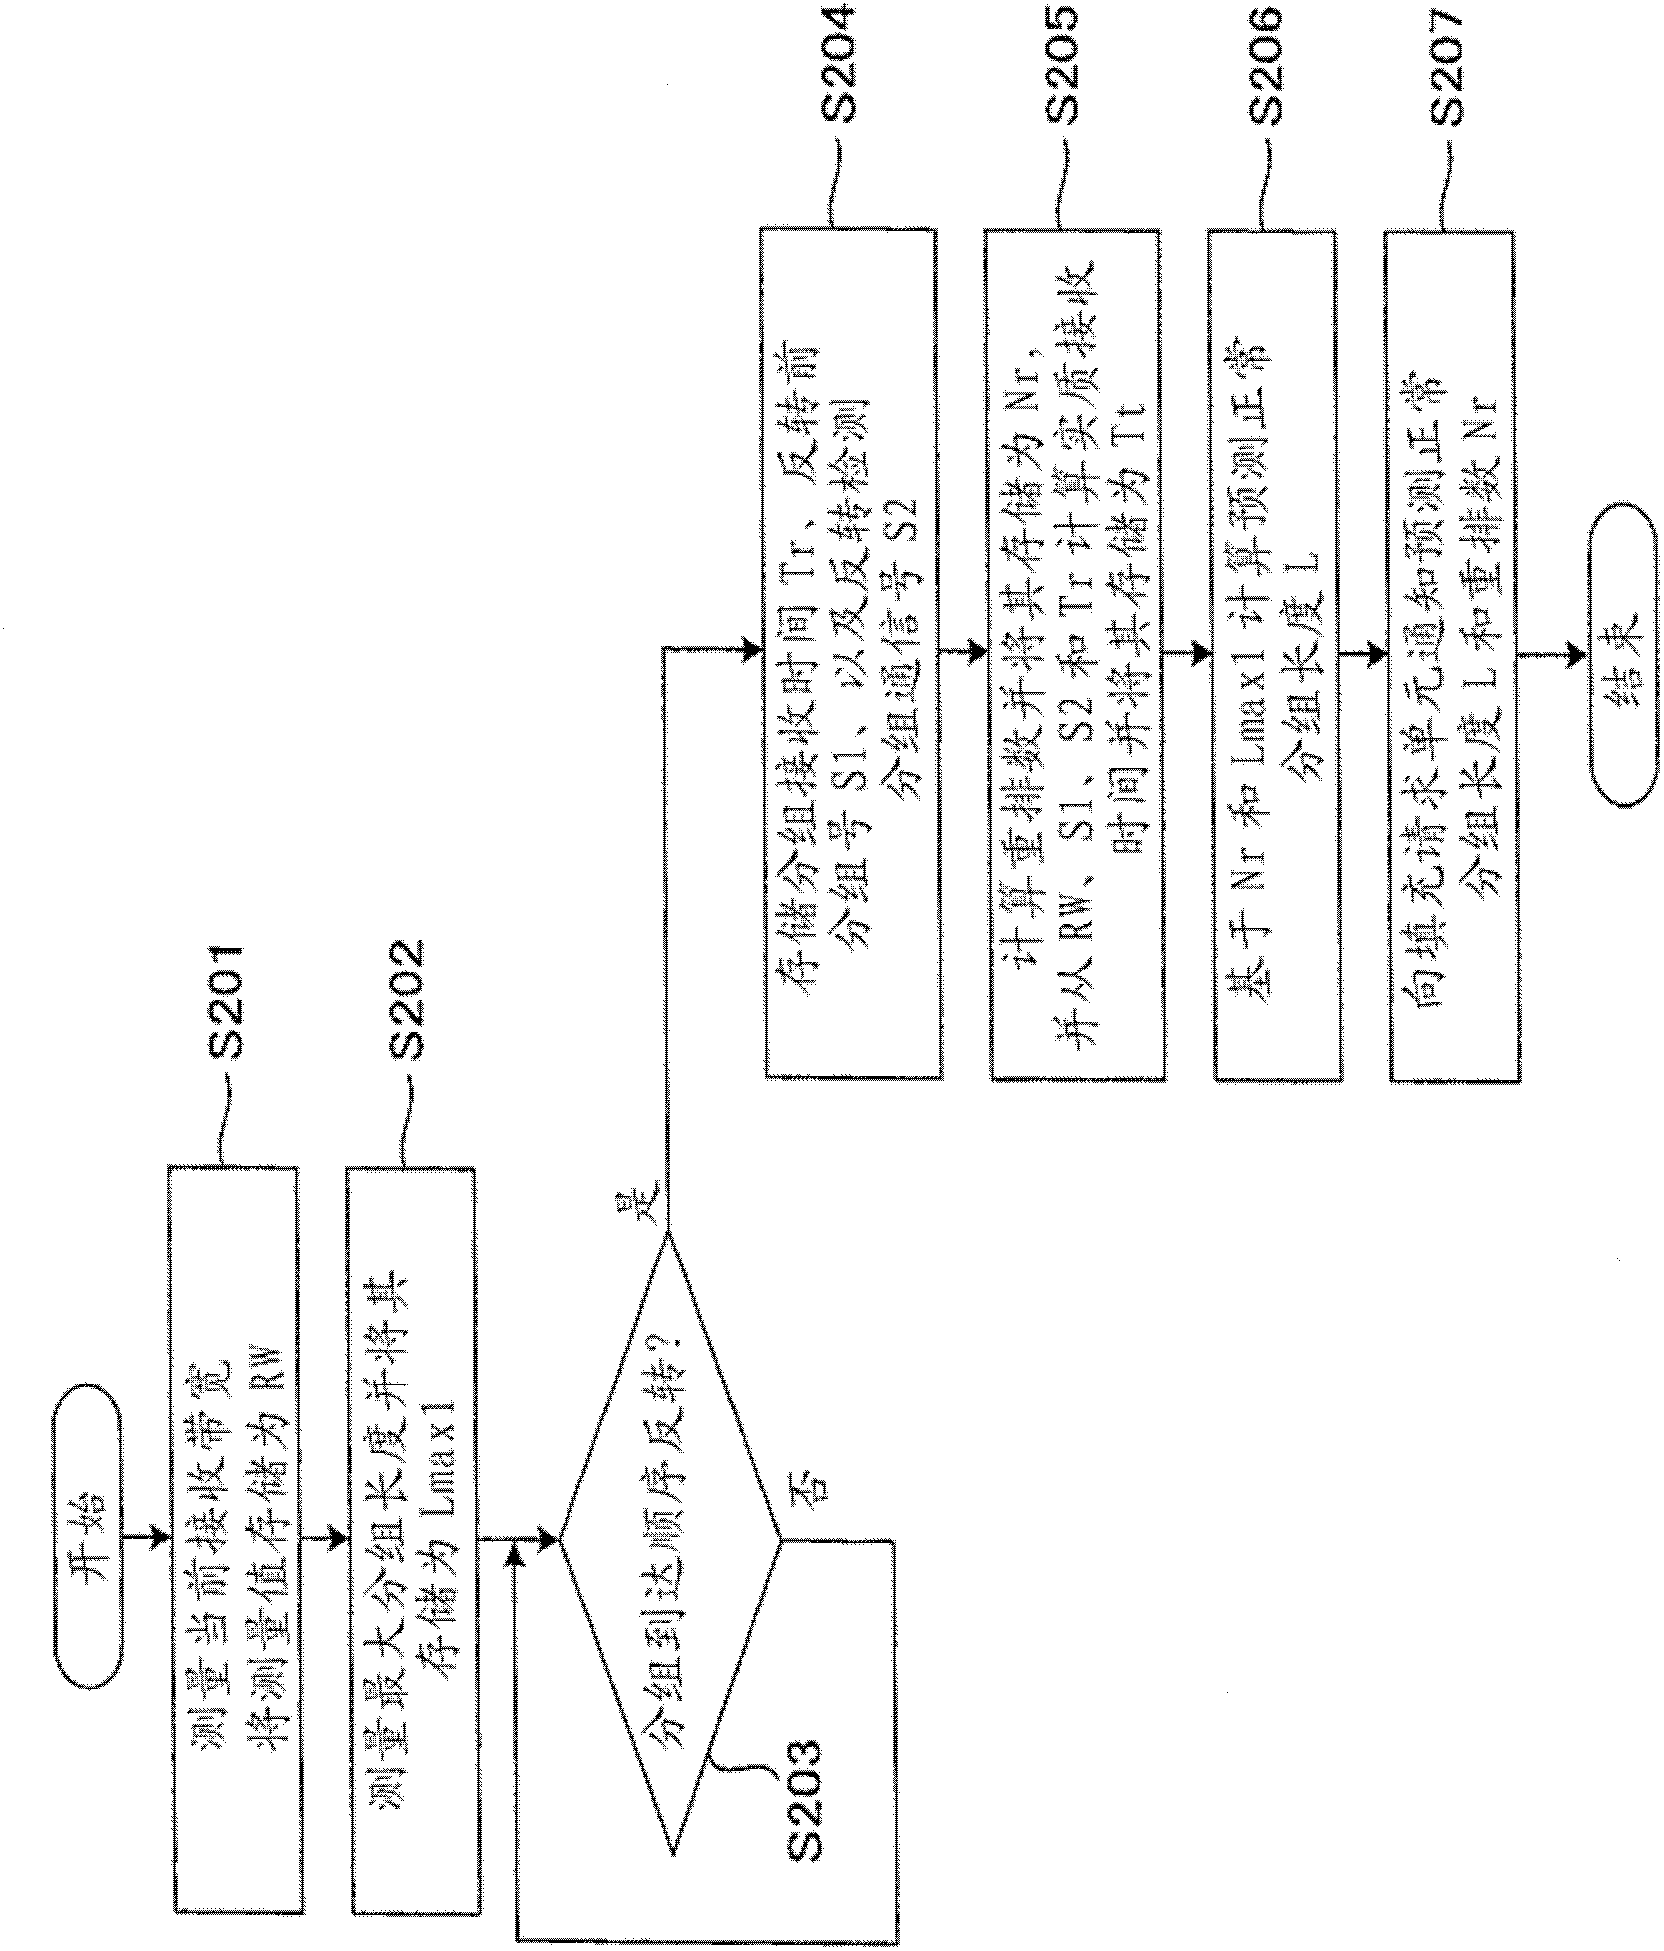 Transmitter terminal and receiver terminal